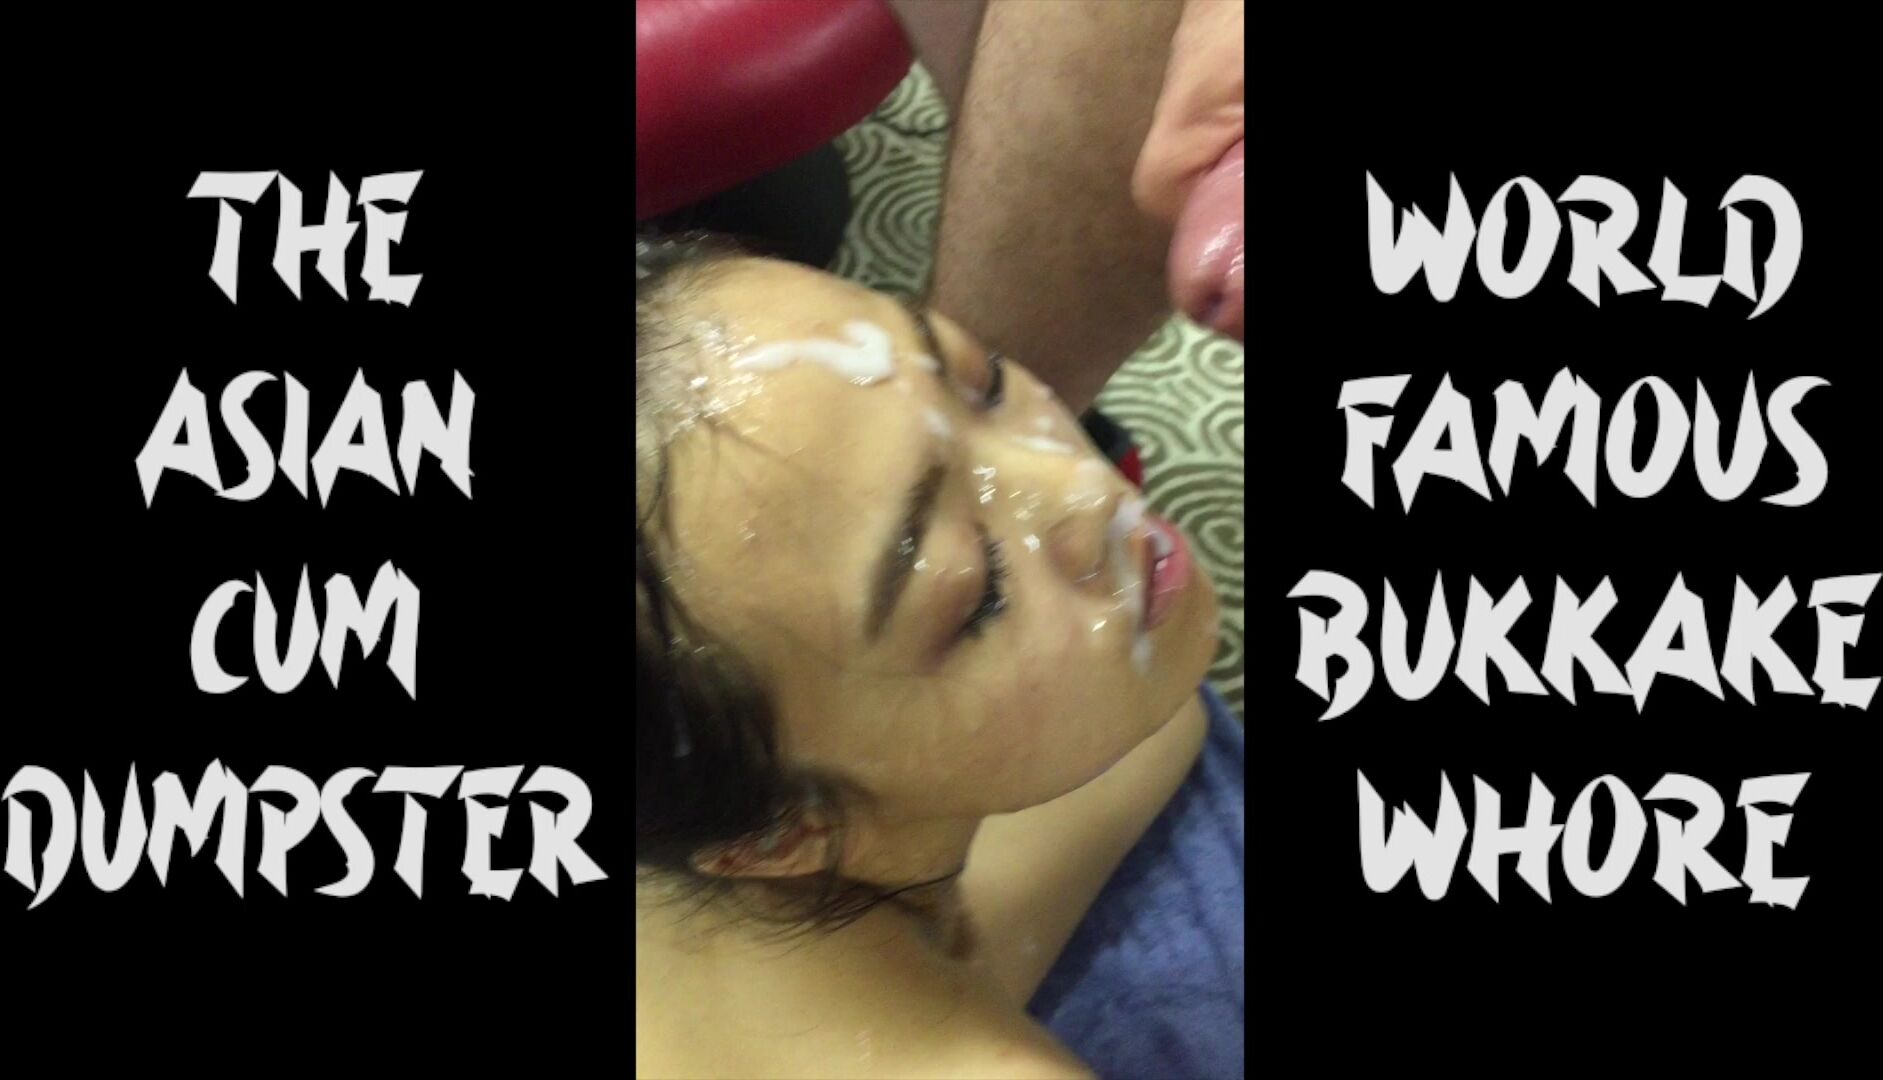 The Asian Cumdumpster - Degrading Facial for World Famous Bukkake Whore